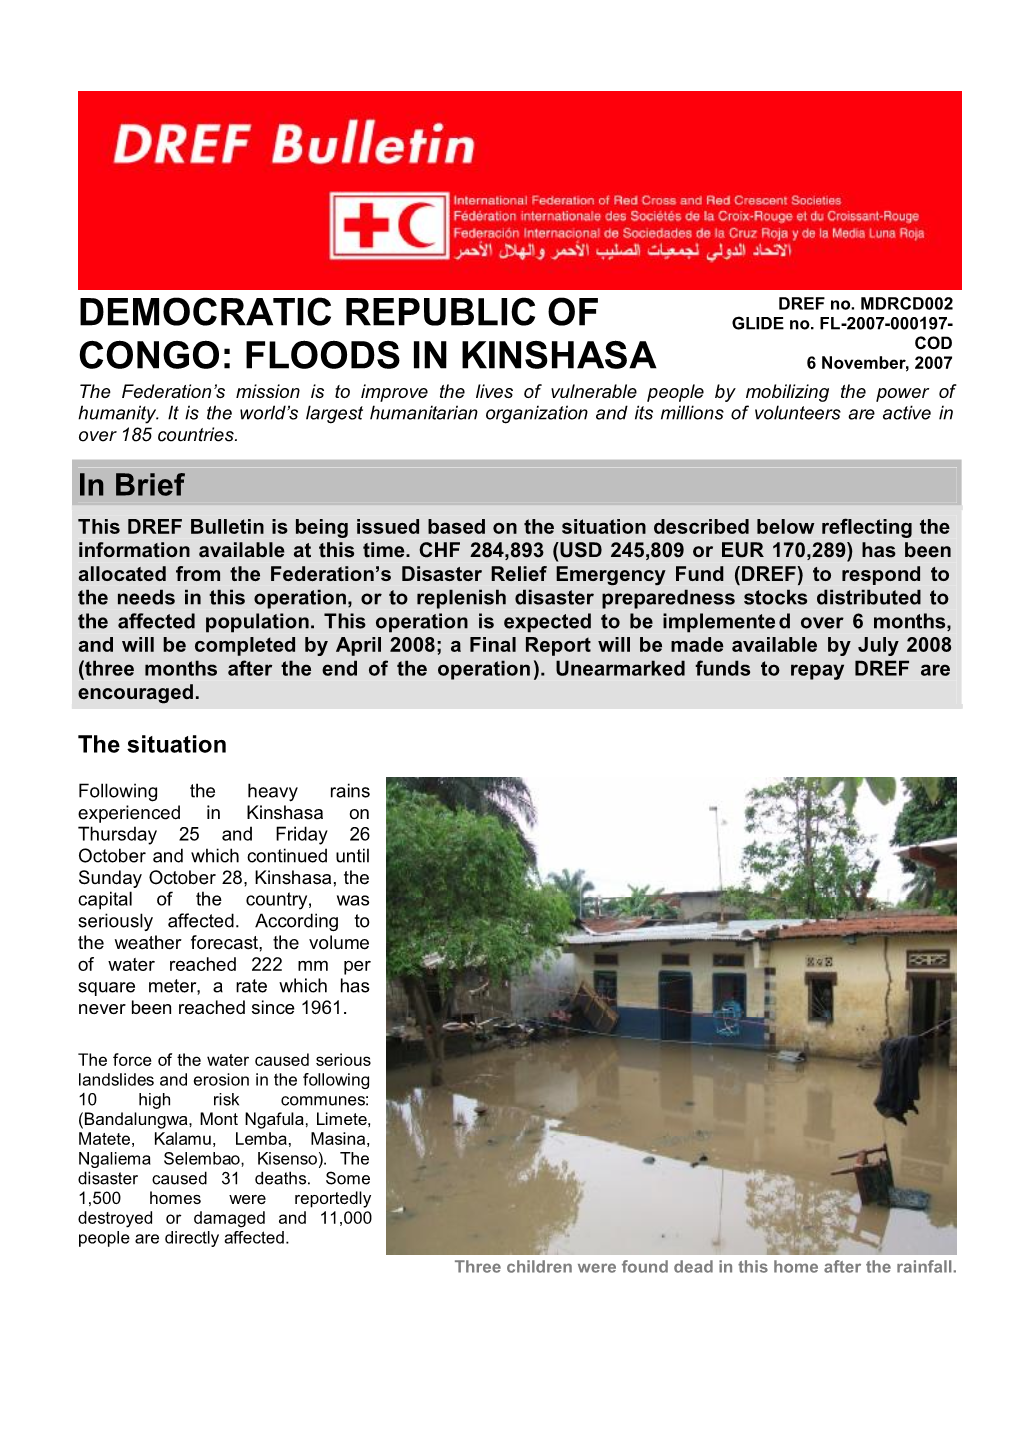 Democratic Republic of Congo: Floods in Kinshasa